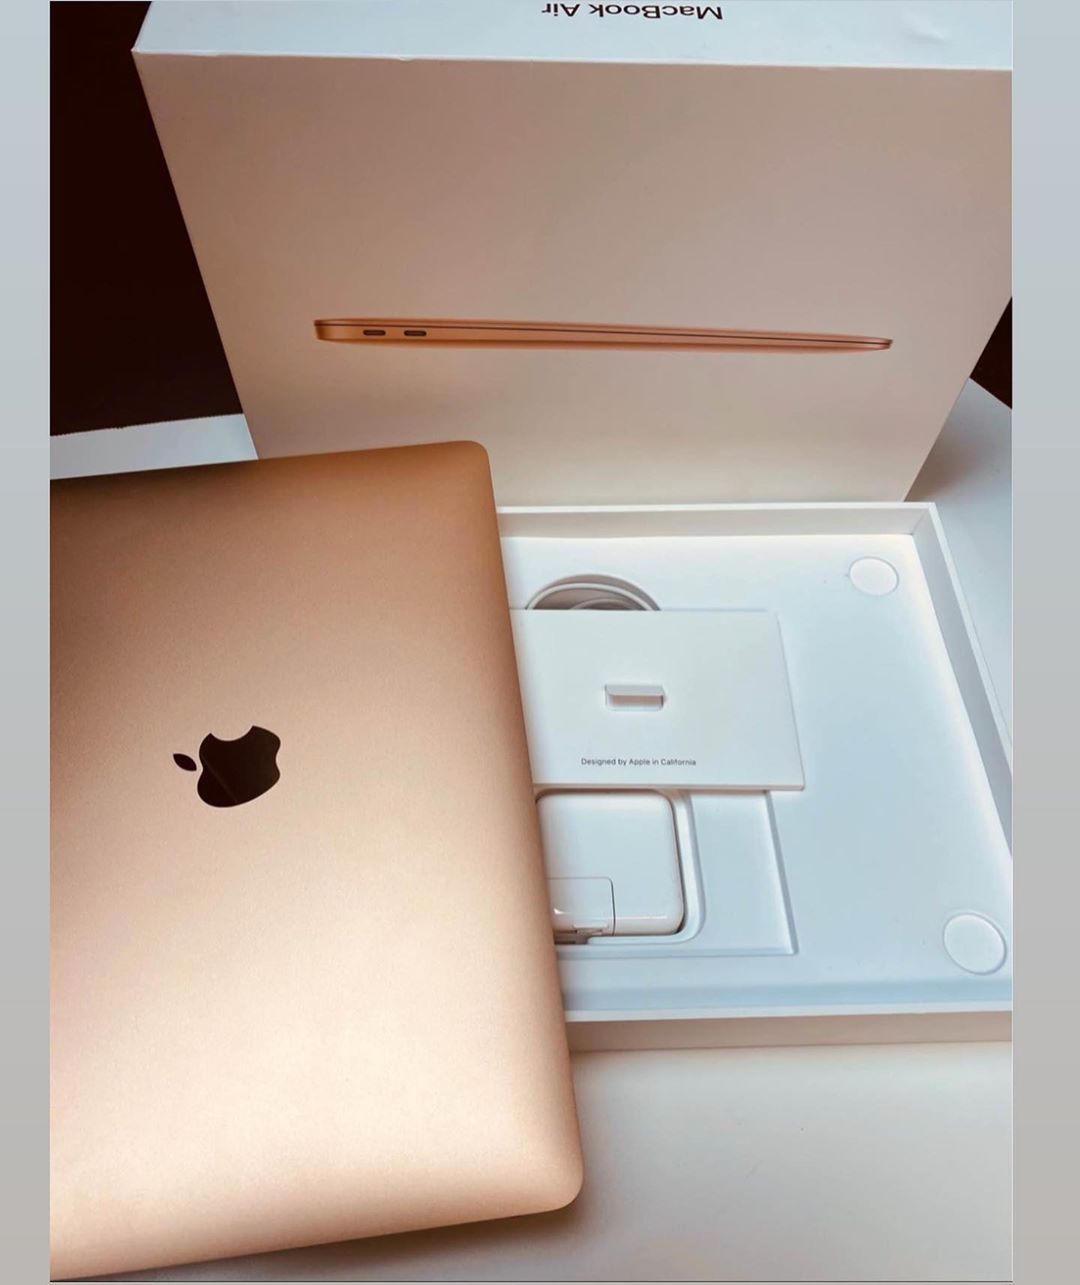 SOLD! Brand New Gold Macbook Air 2020 Computers Nigeria